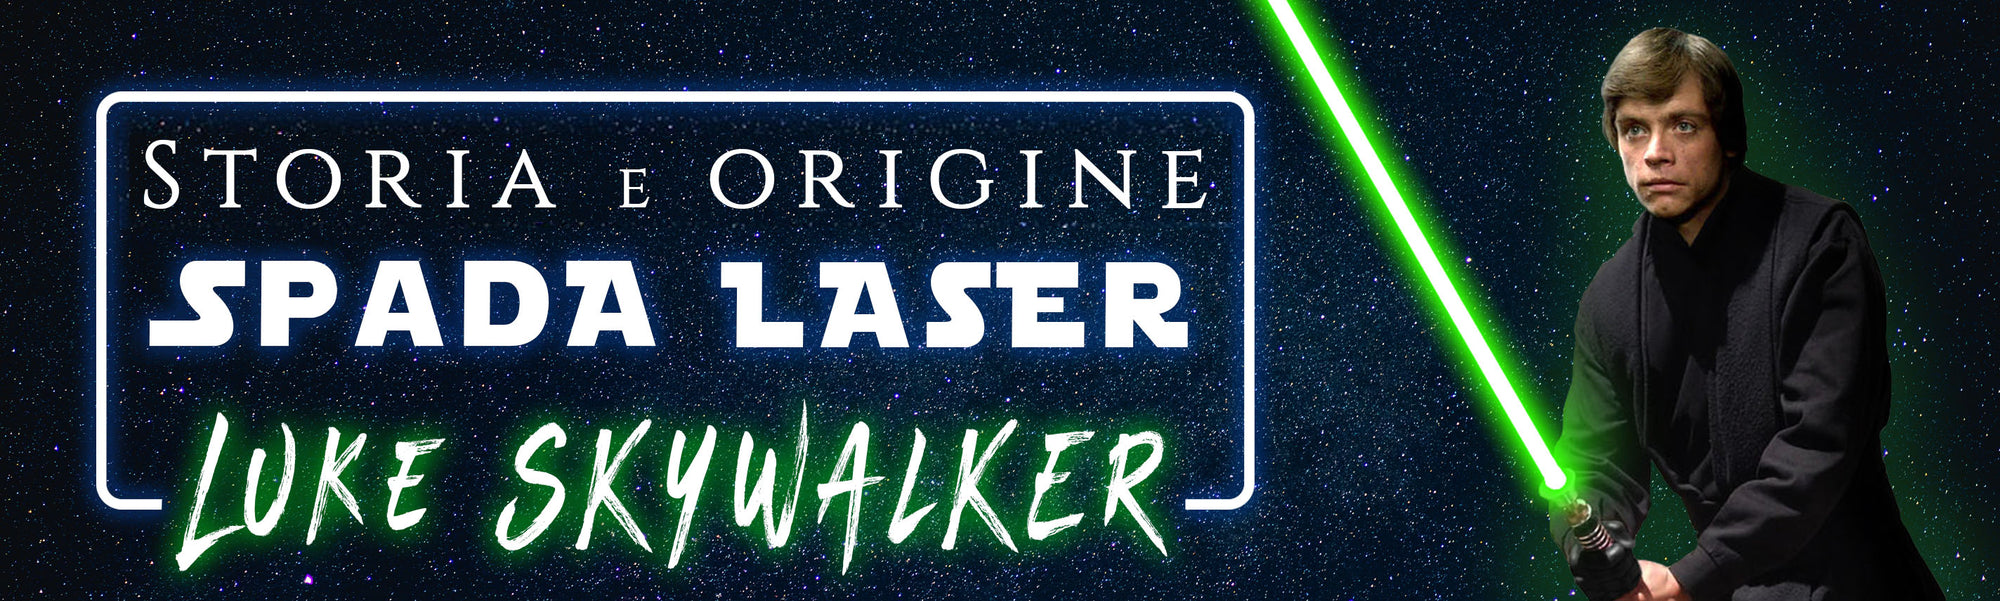 Spada laser verde di Luke Skywalker